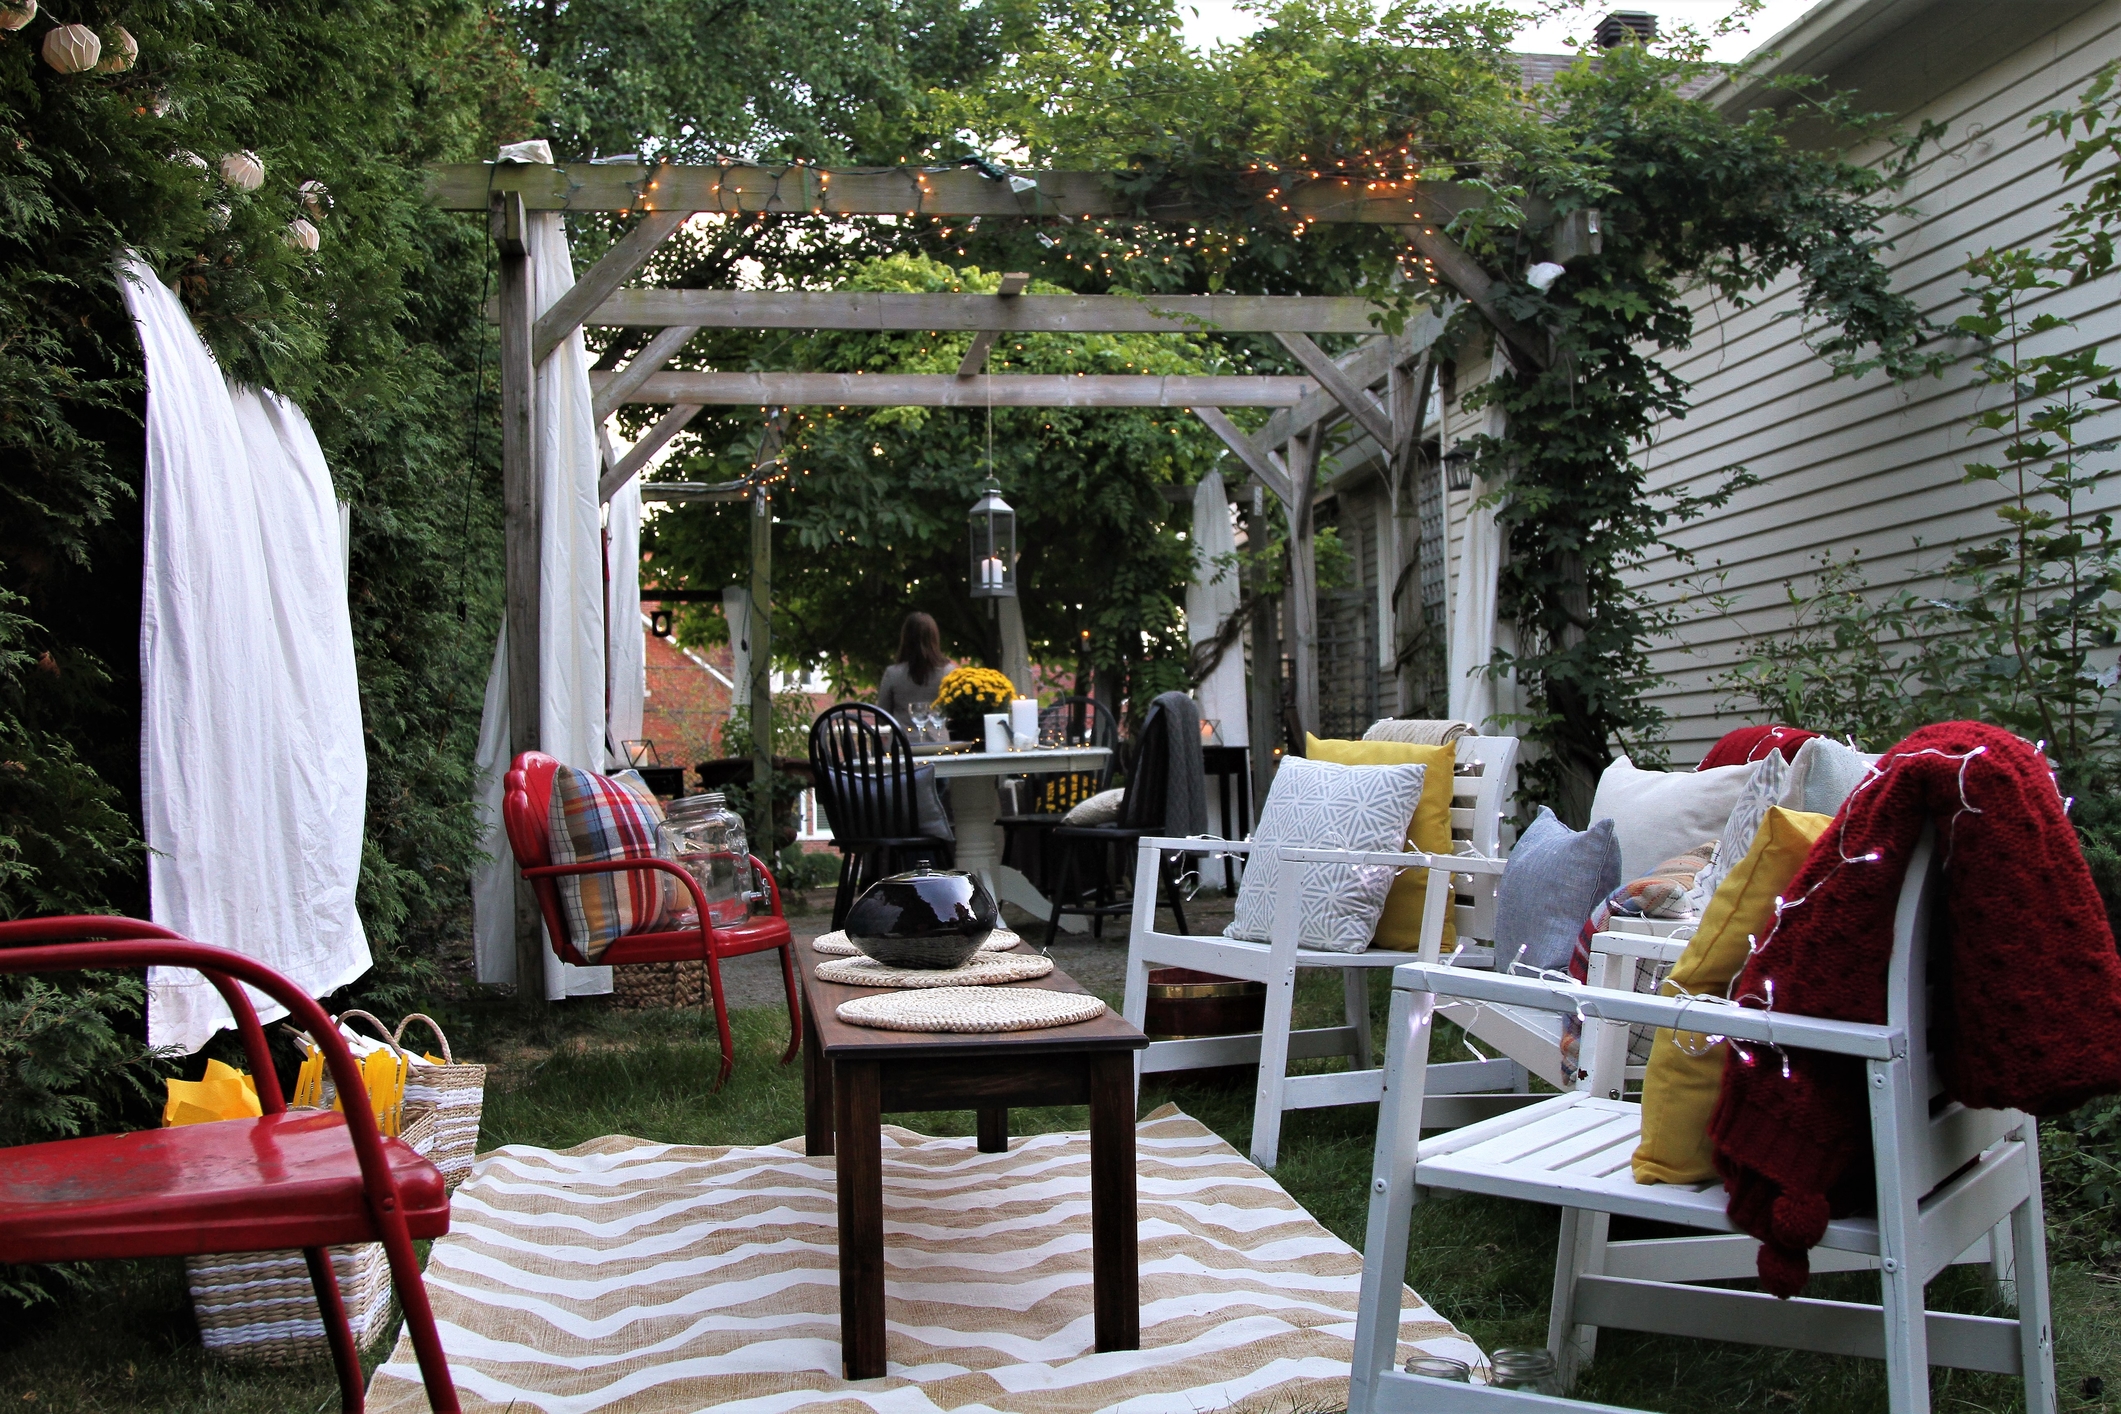 Create Your Own Backyard Retreat